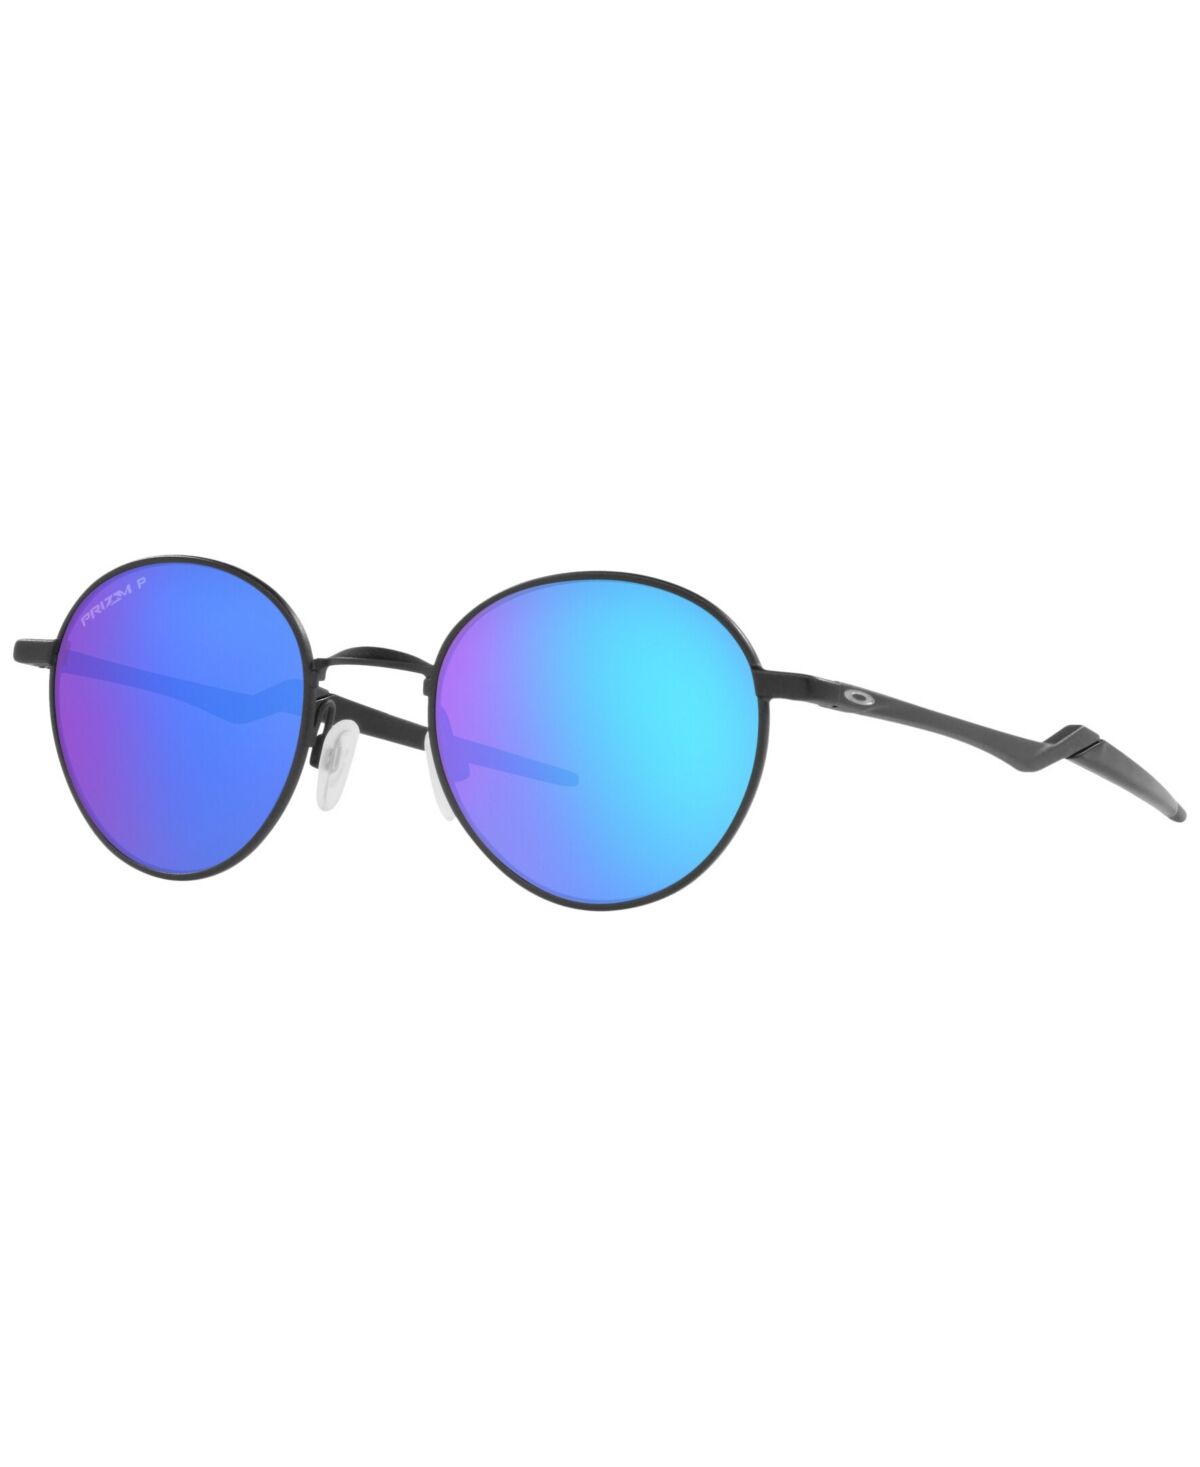 Oakley Men's Polarized Sunglasses, OO4146 Terrigal 51 - Satin Light Steel